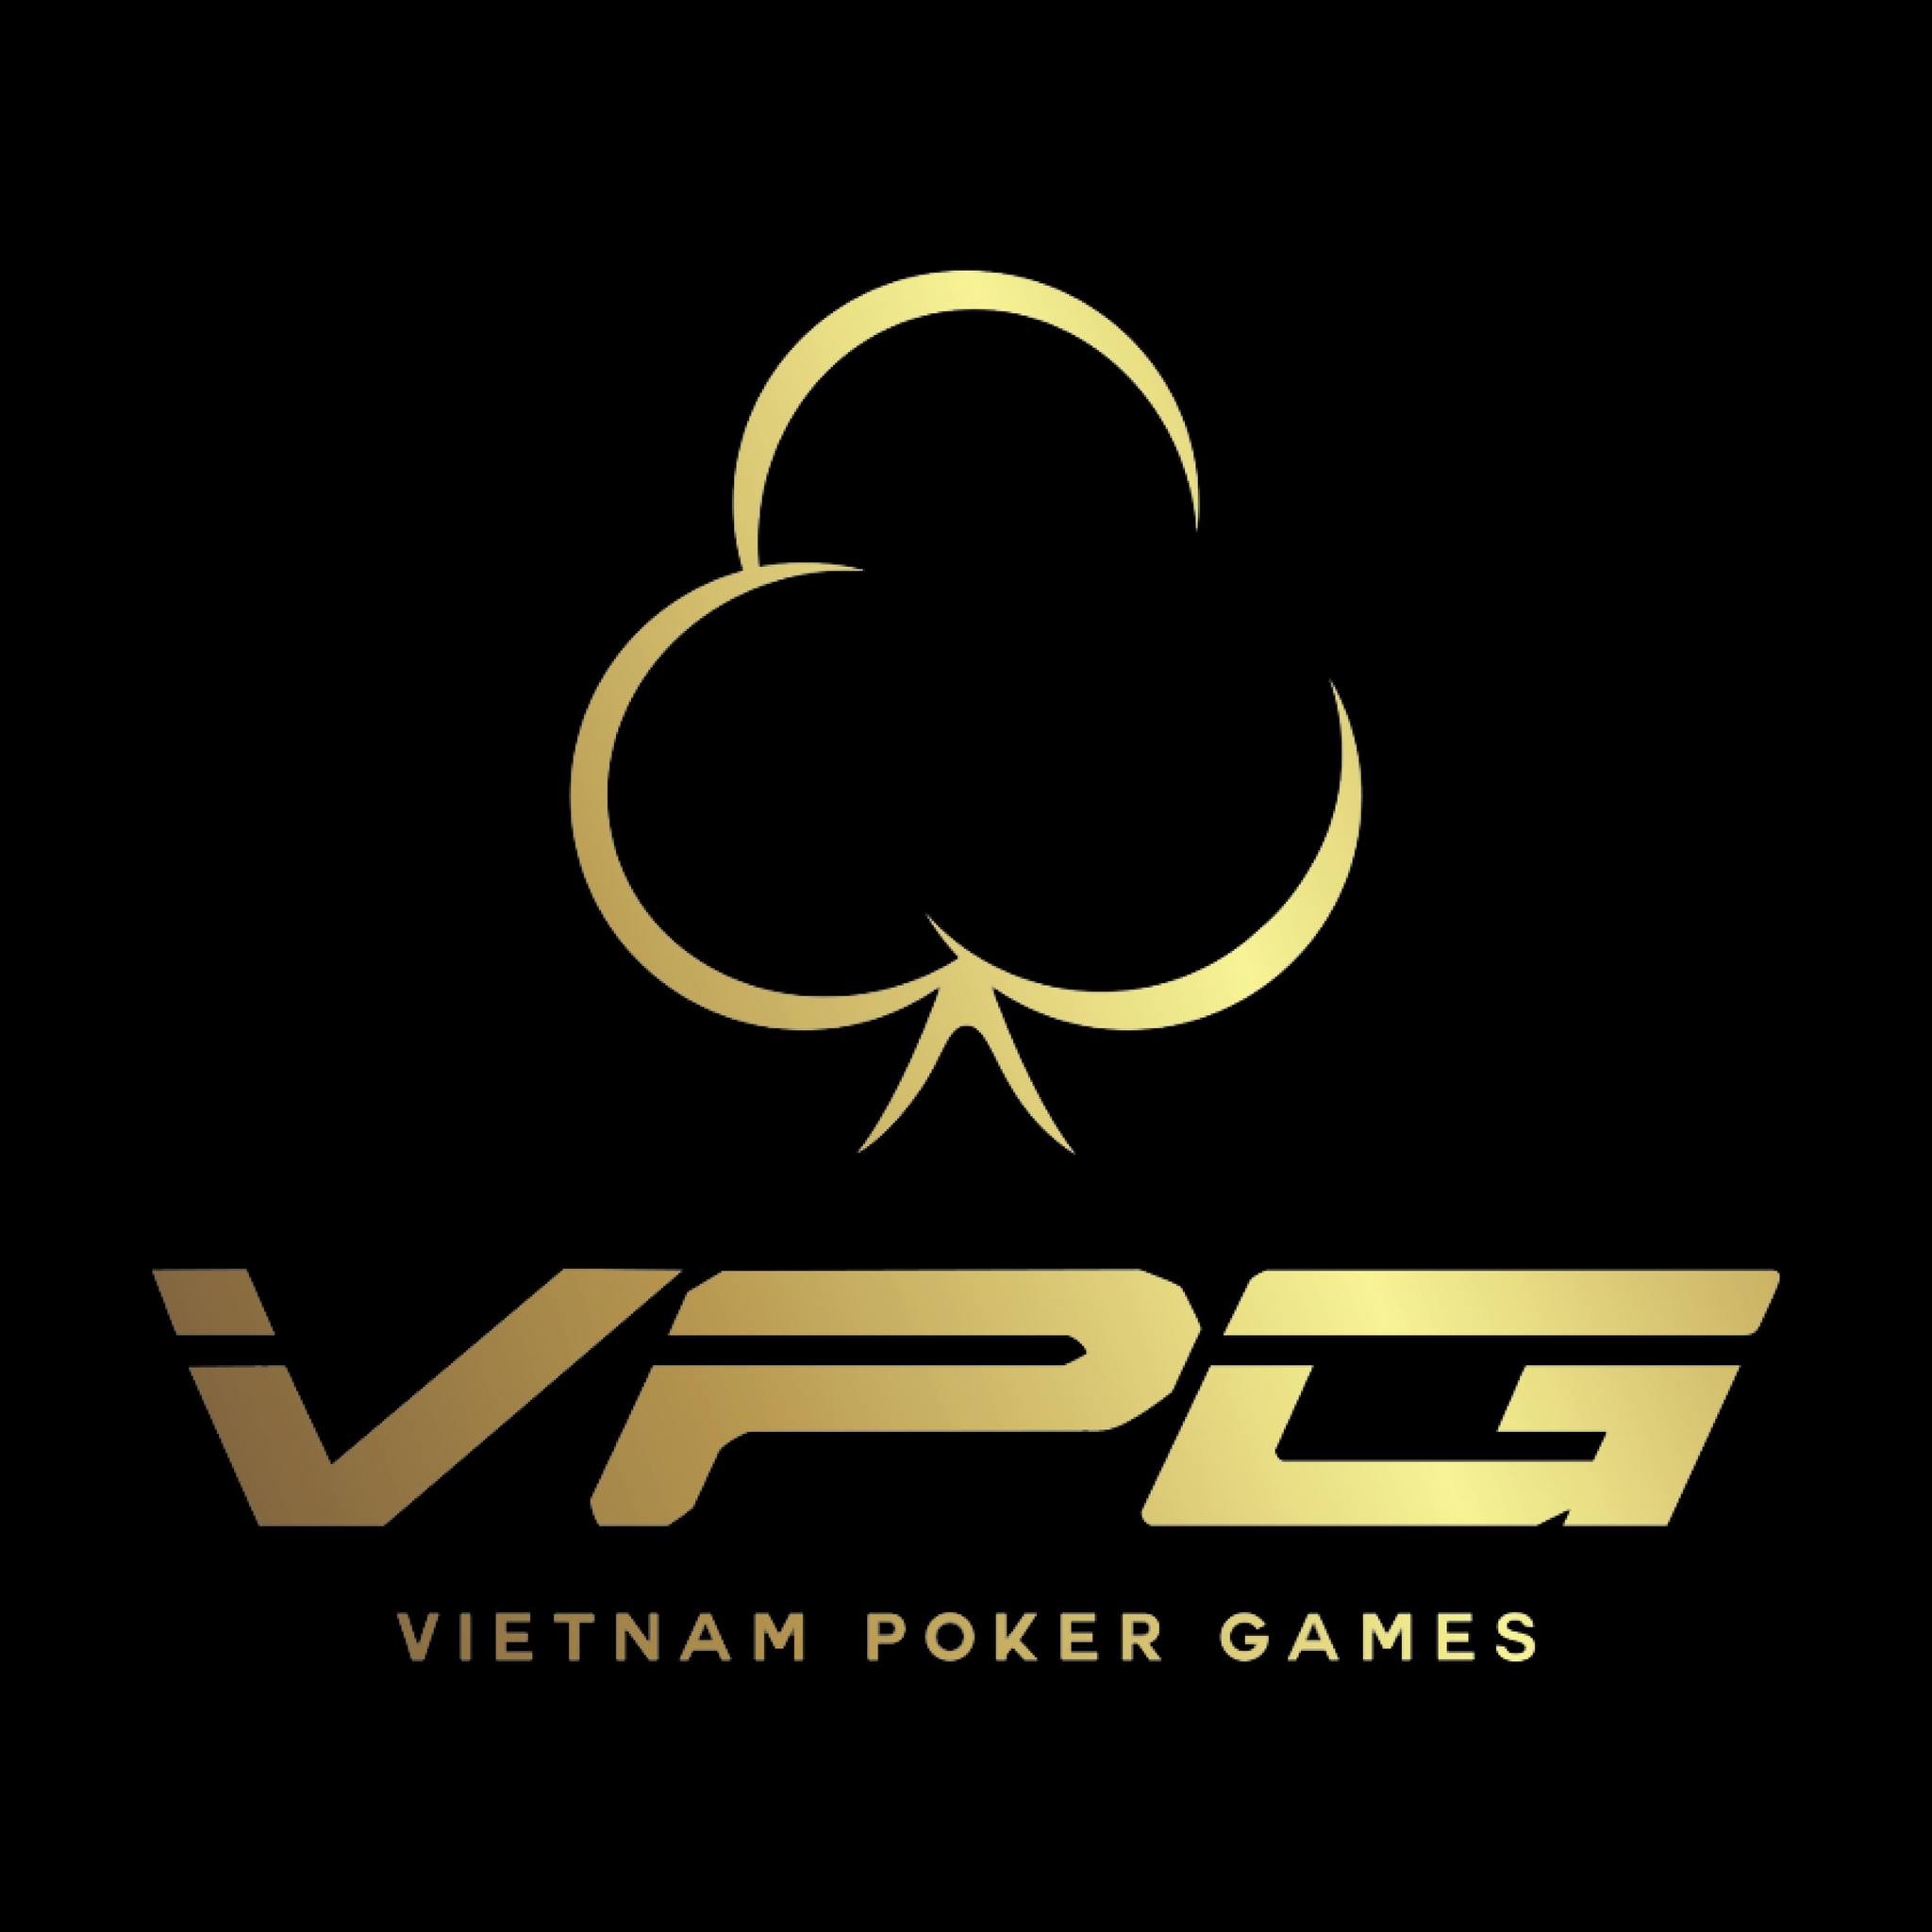 VPG Vietnam Poker Games